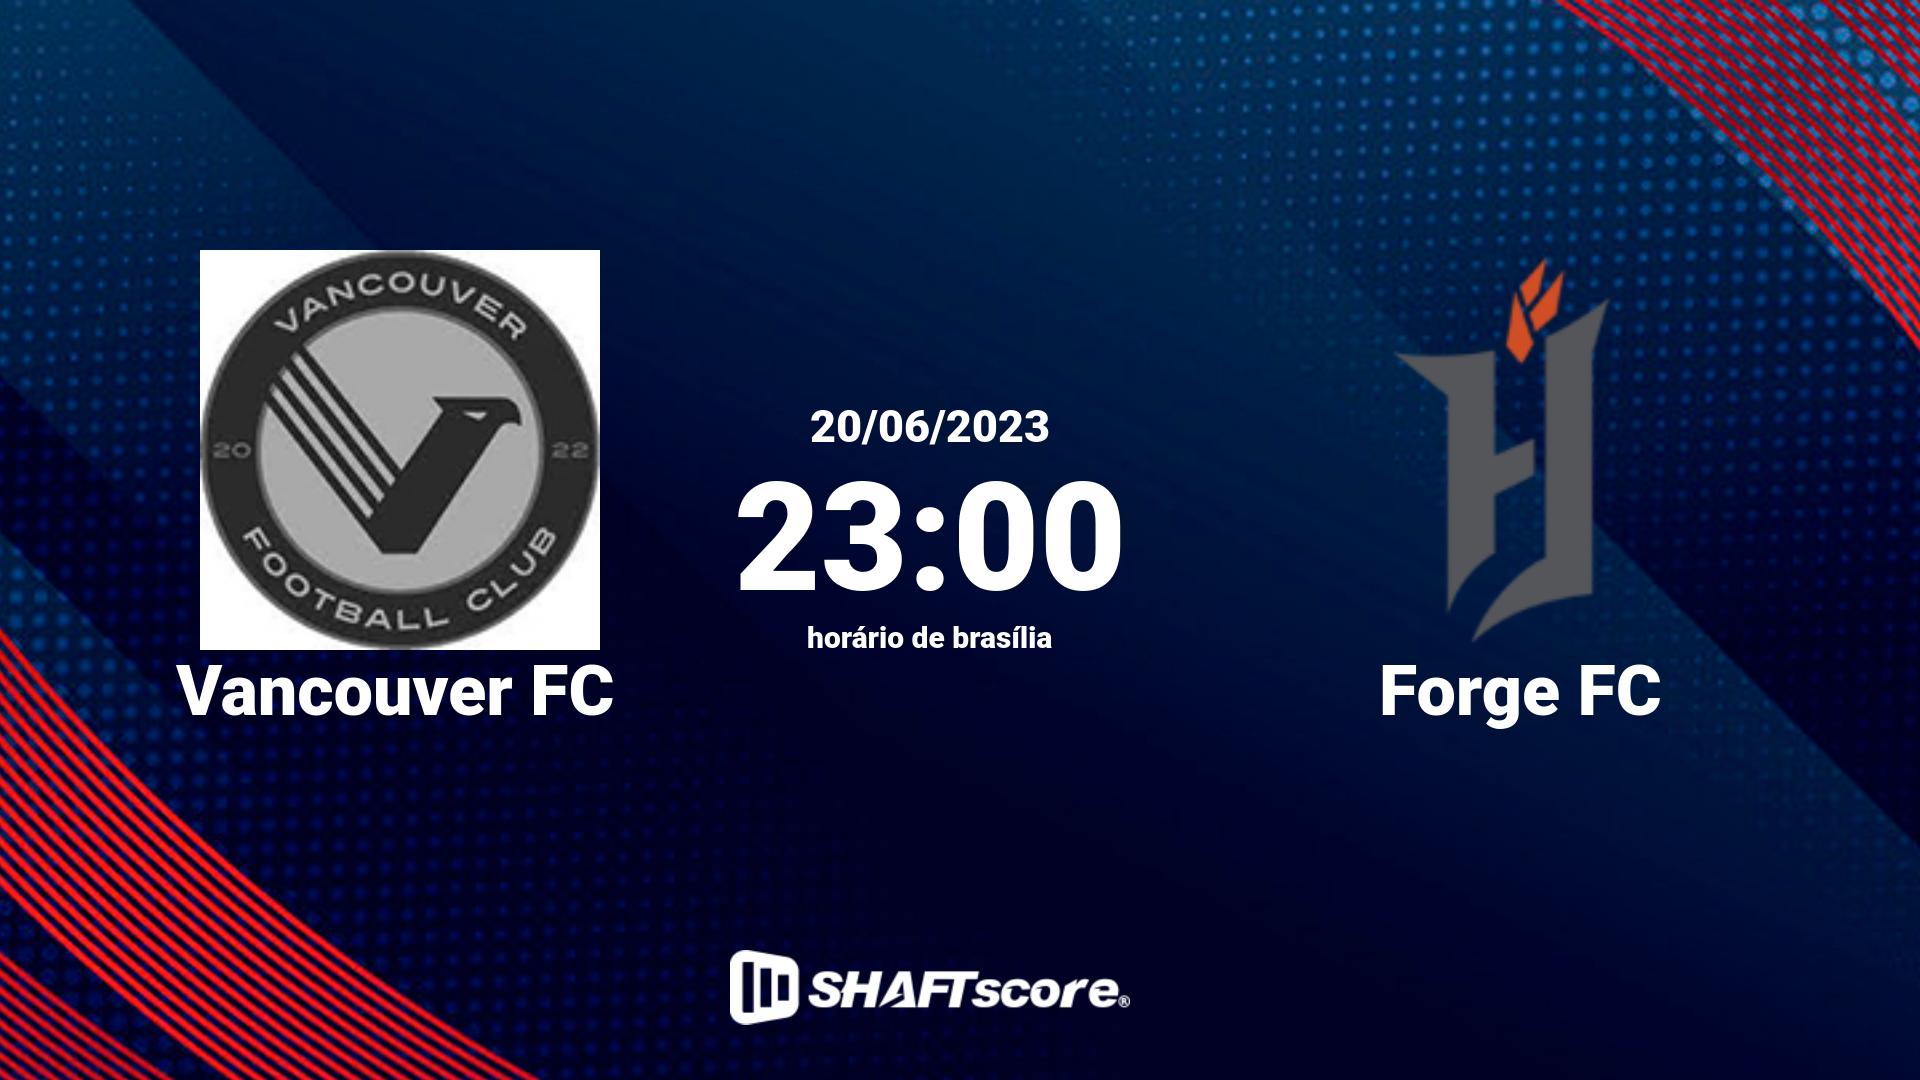 Estatísticas do jogo Vancouver FC vs Forge FC 20.06 23:00